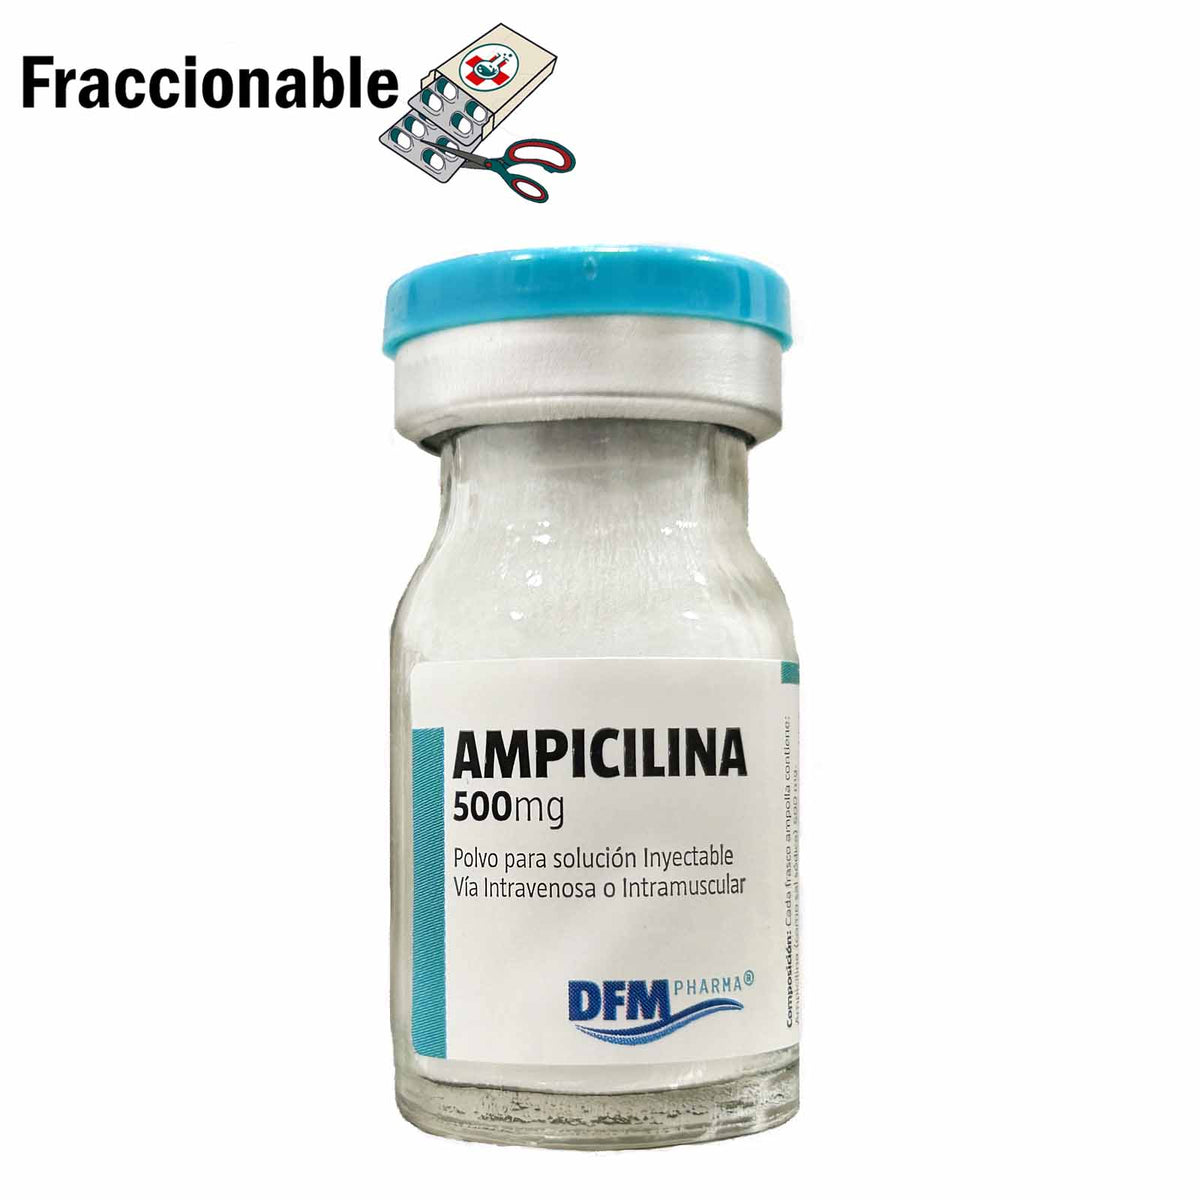 Ampicilina Inyectable 500mg x 1 Ampolla